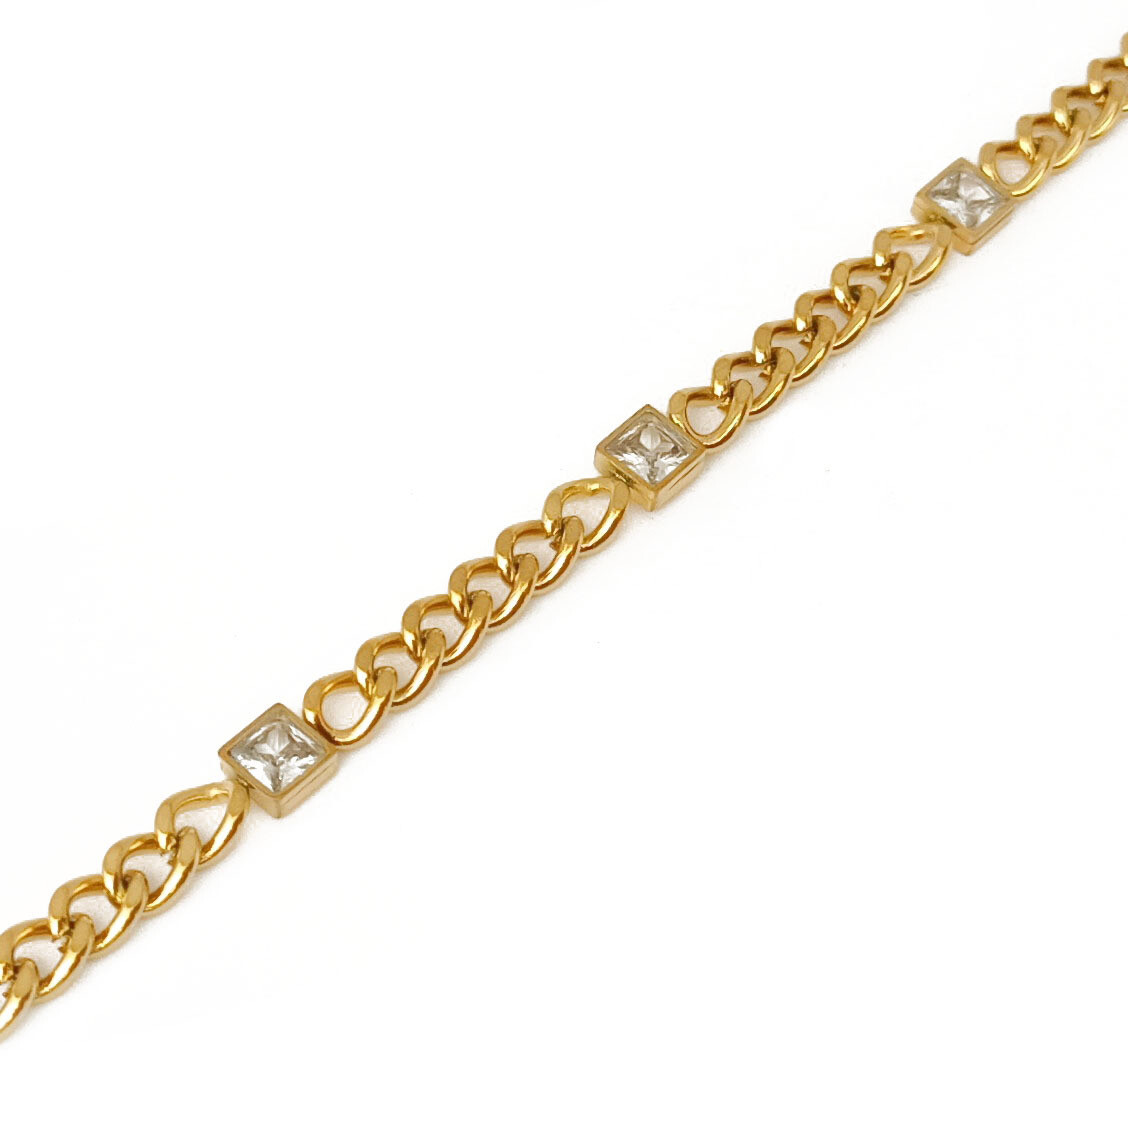 Gold toned zirconia bracelet